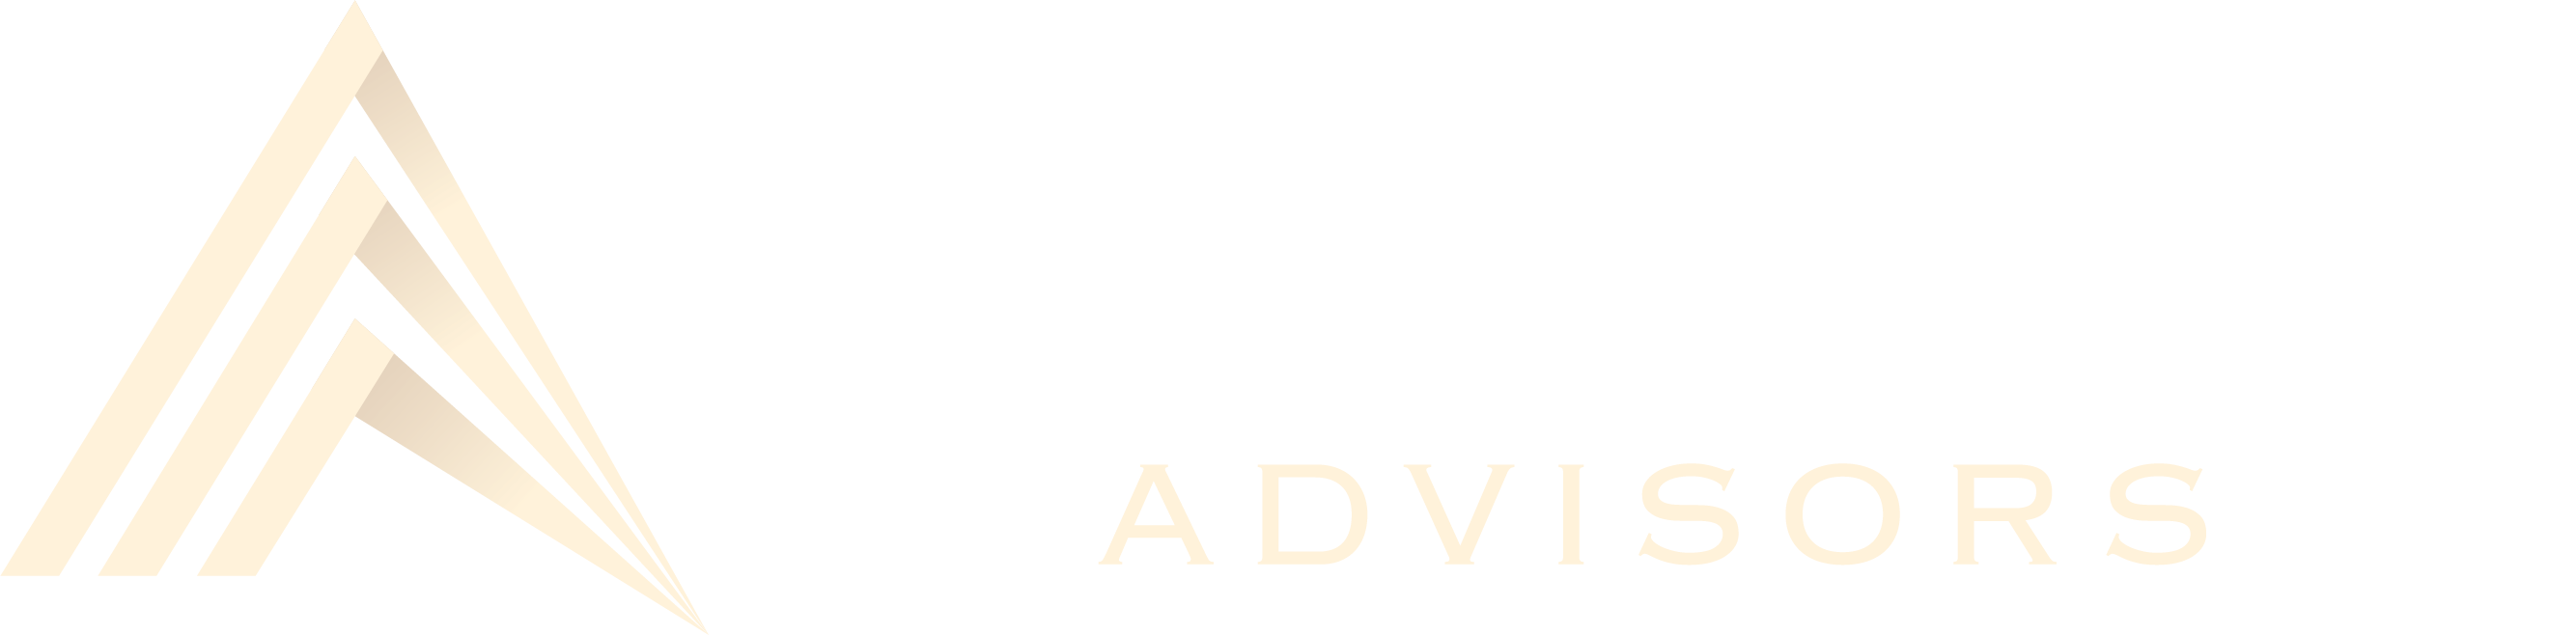 Acuity Advisors logo